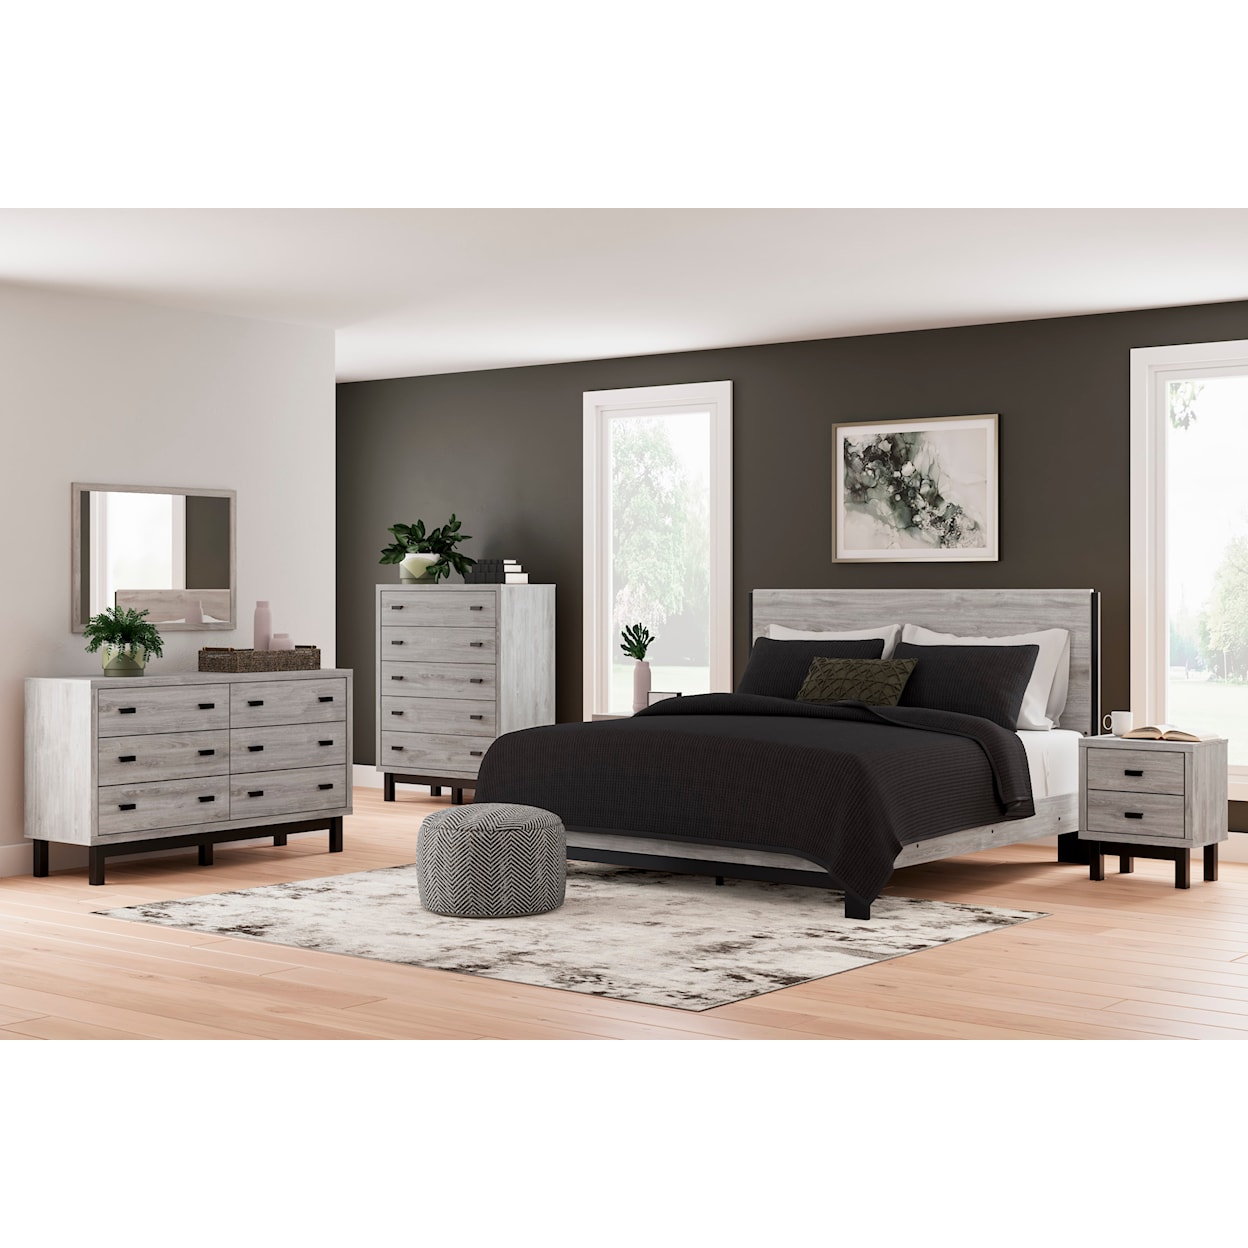 Ashley Furniture Benchcraft Vessalli King Bedroom Set